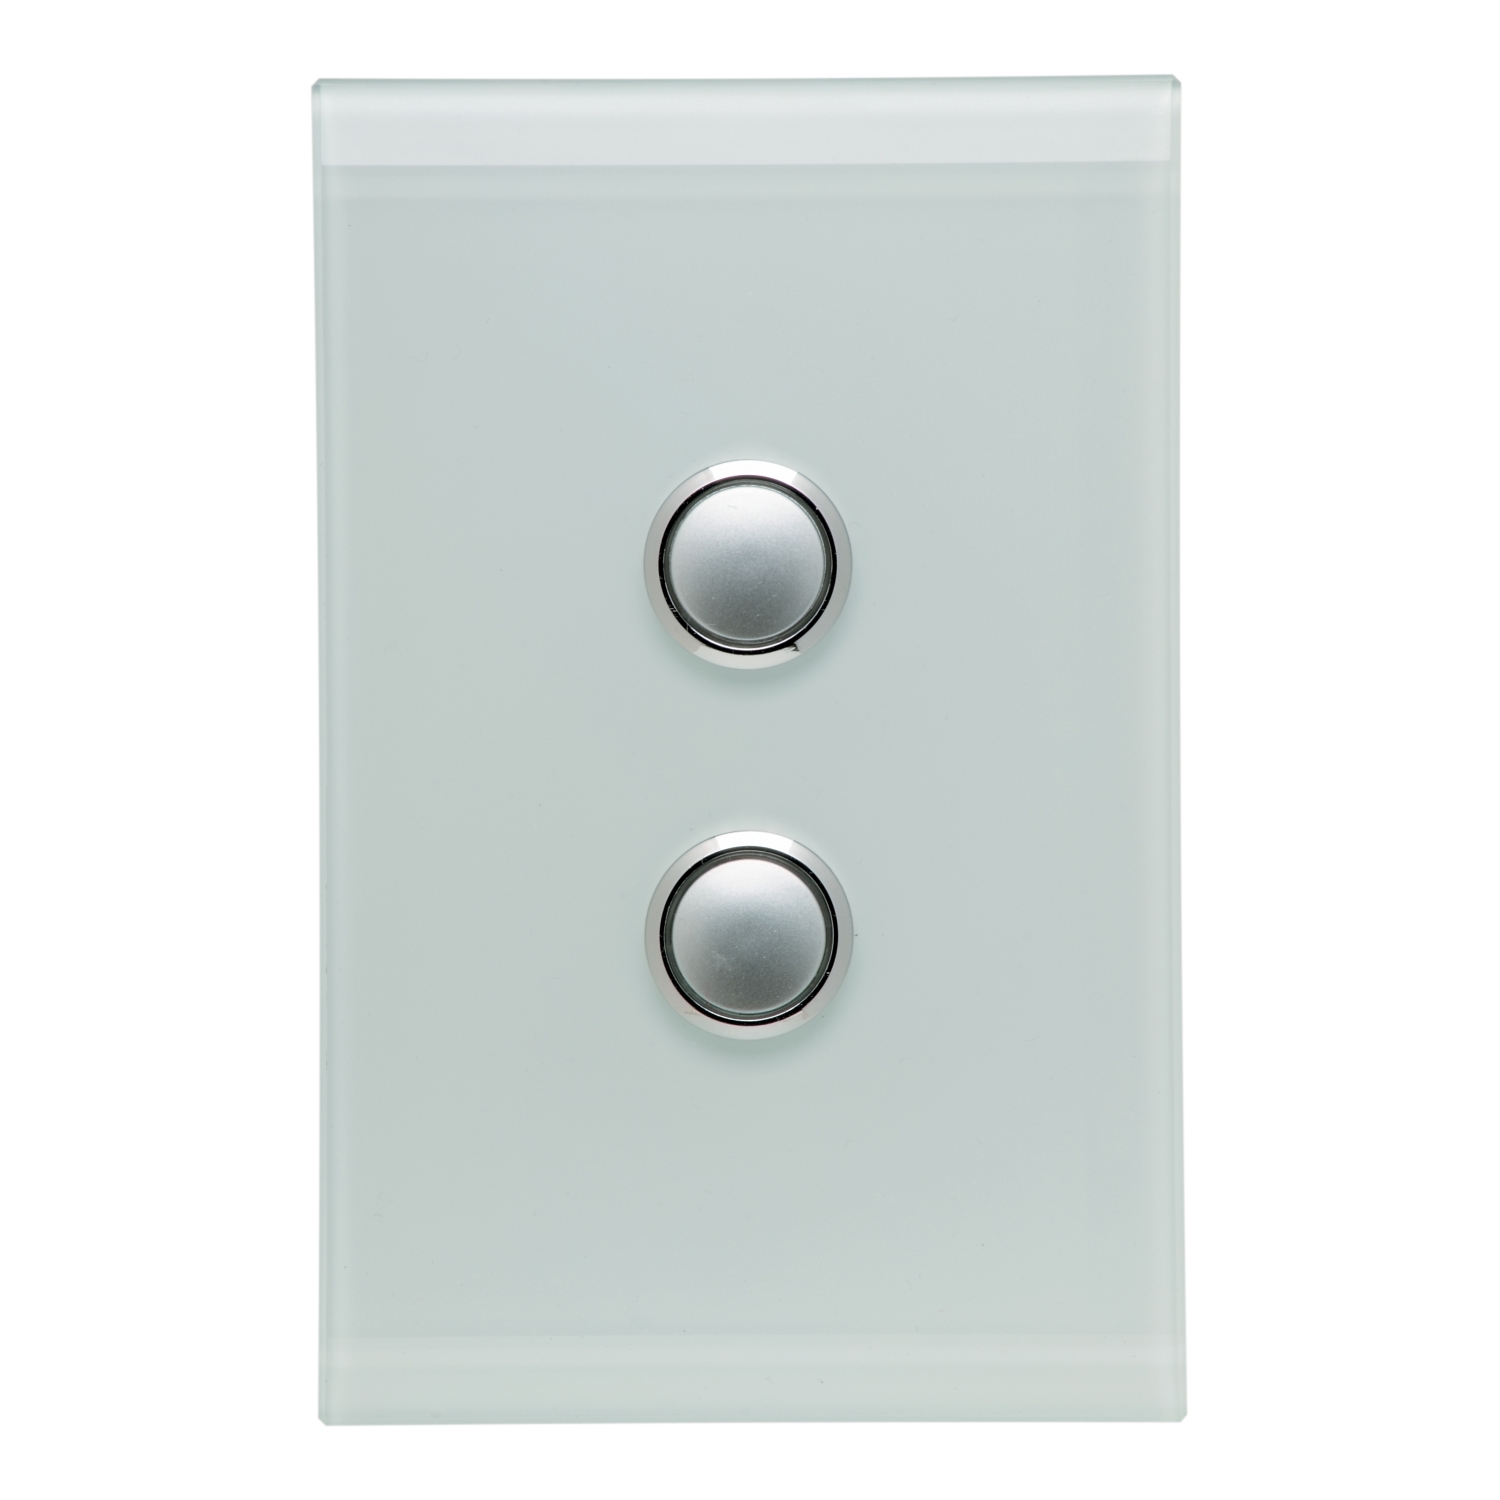 Push-button Switch LED, 2 Gang, 250V, 16AX/20A, LED Indicator